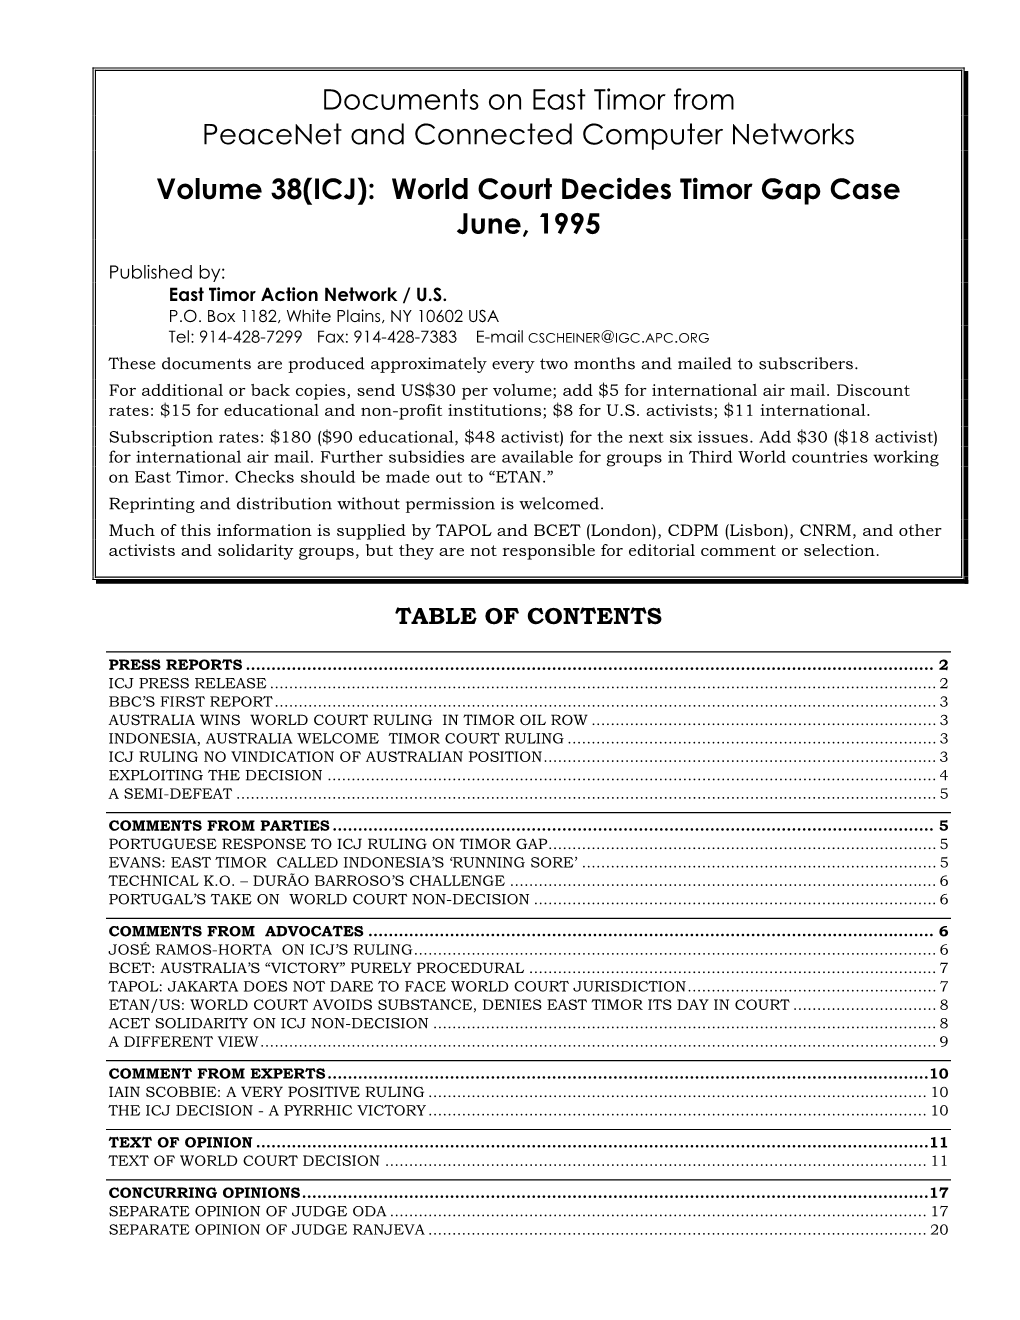 World Court Decides Timor Gap Case June, 1995